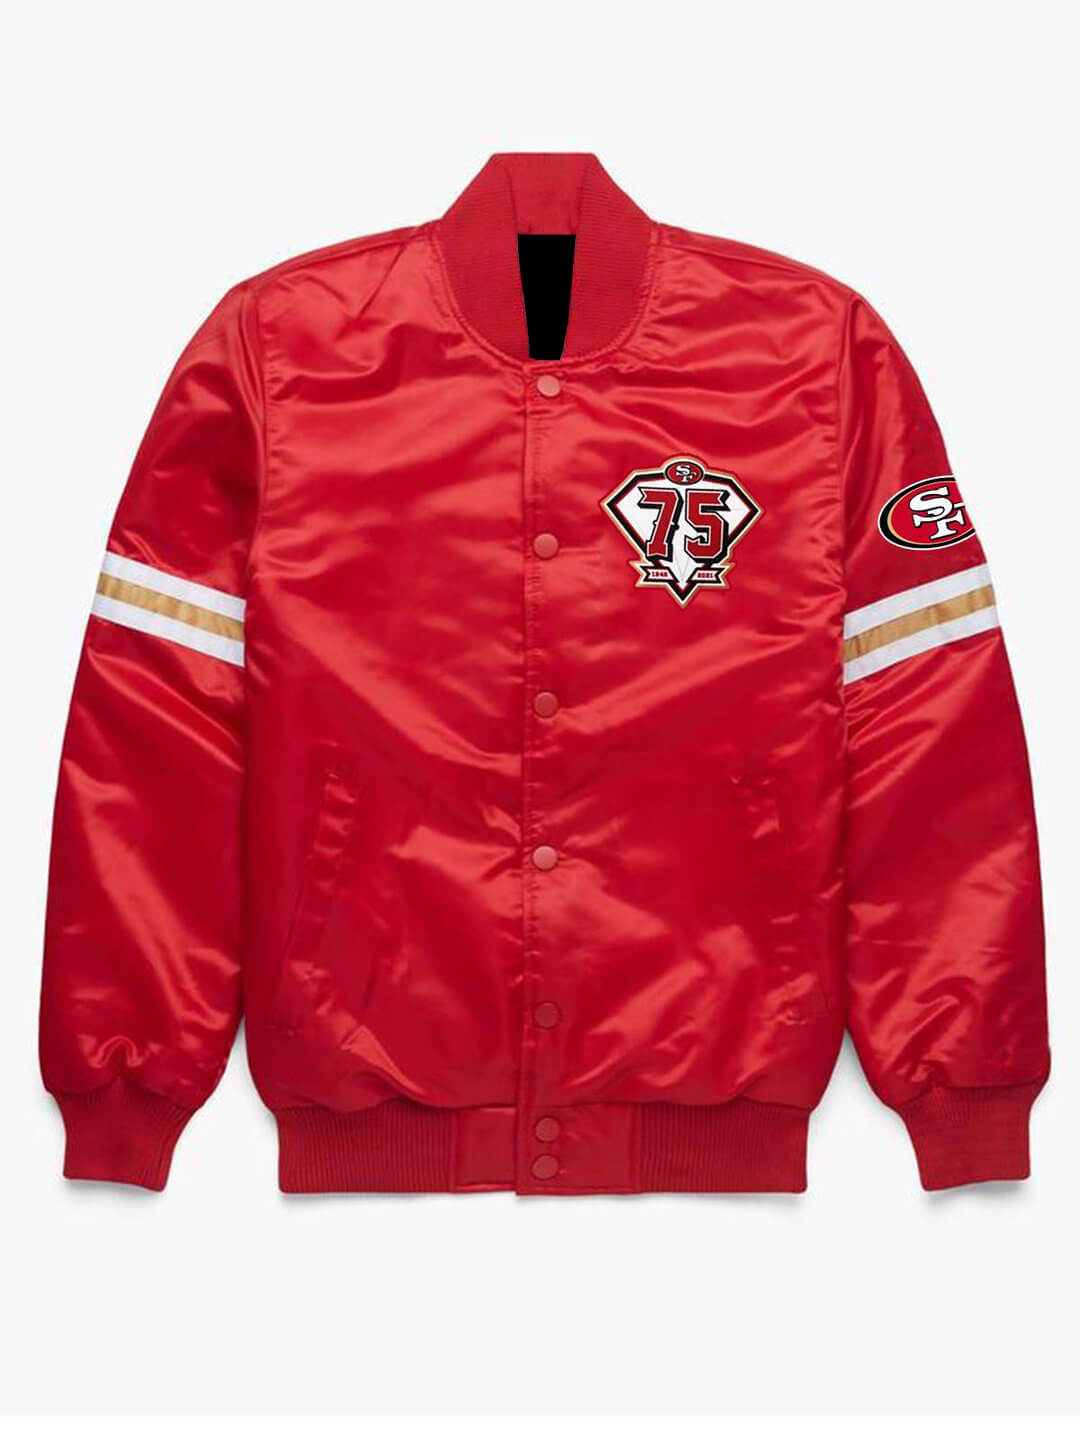 San Francisco 49ers Red Satin Jacket